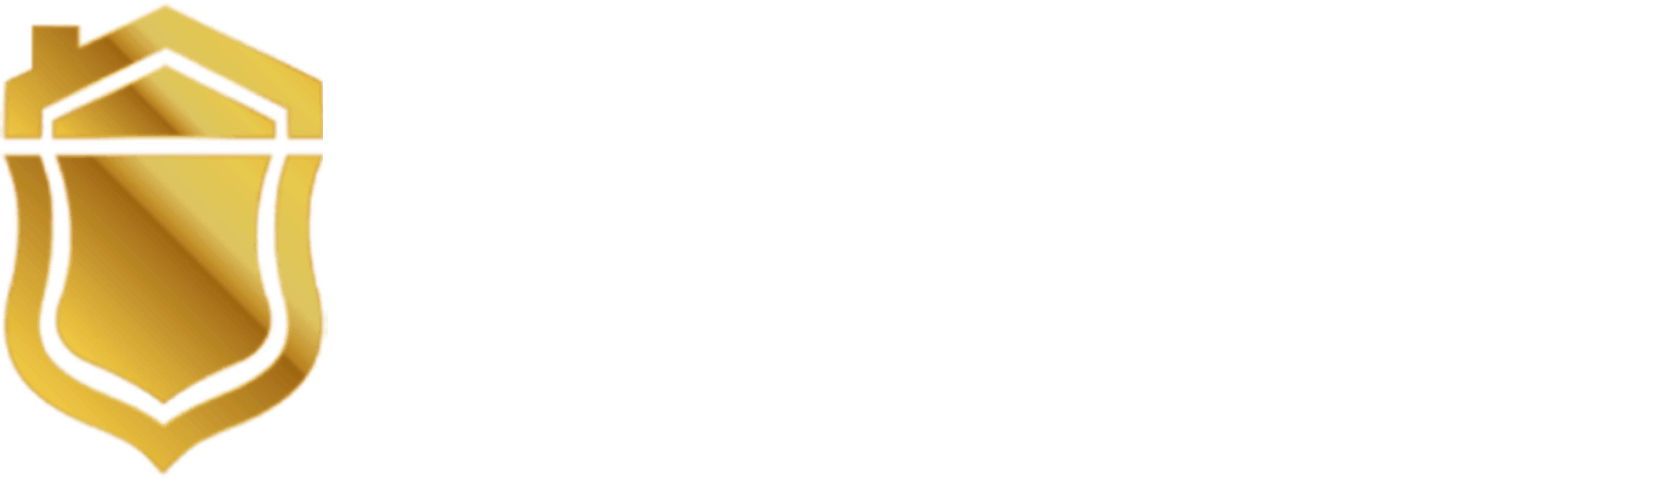 Shield Management - logo